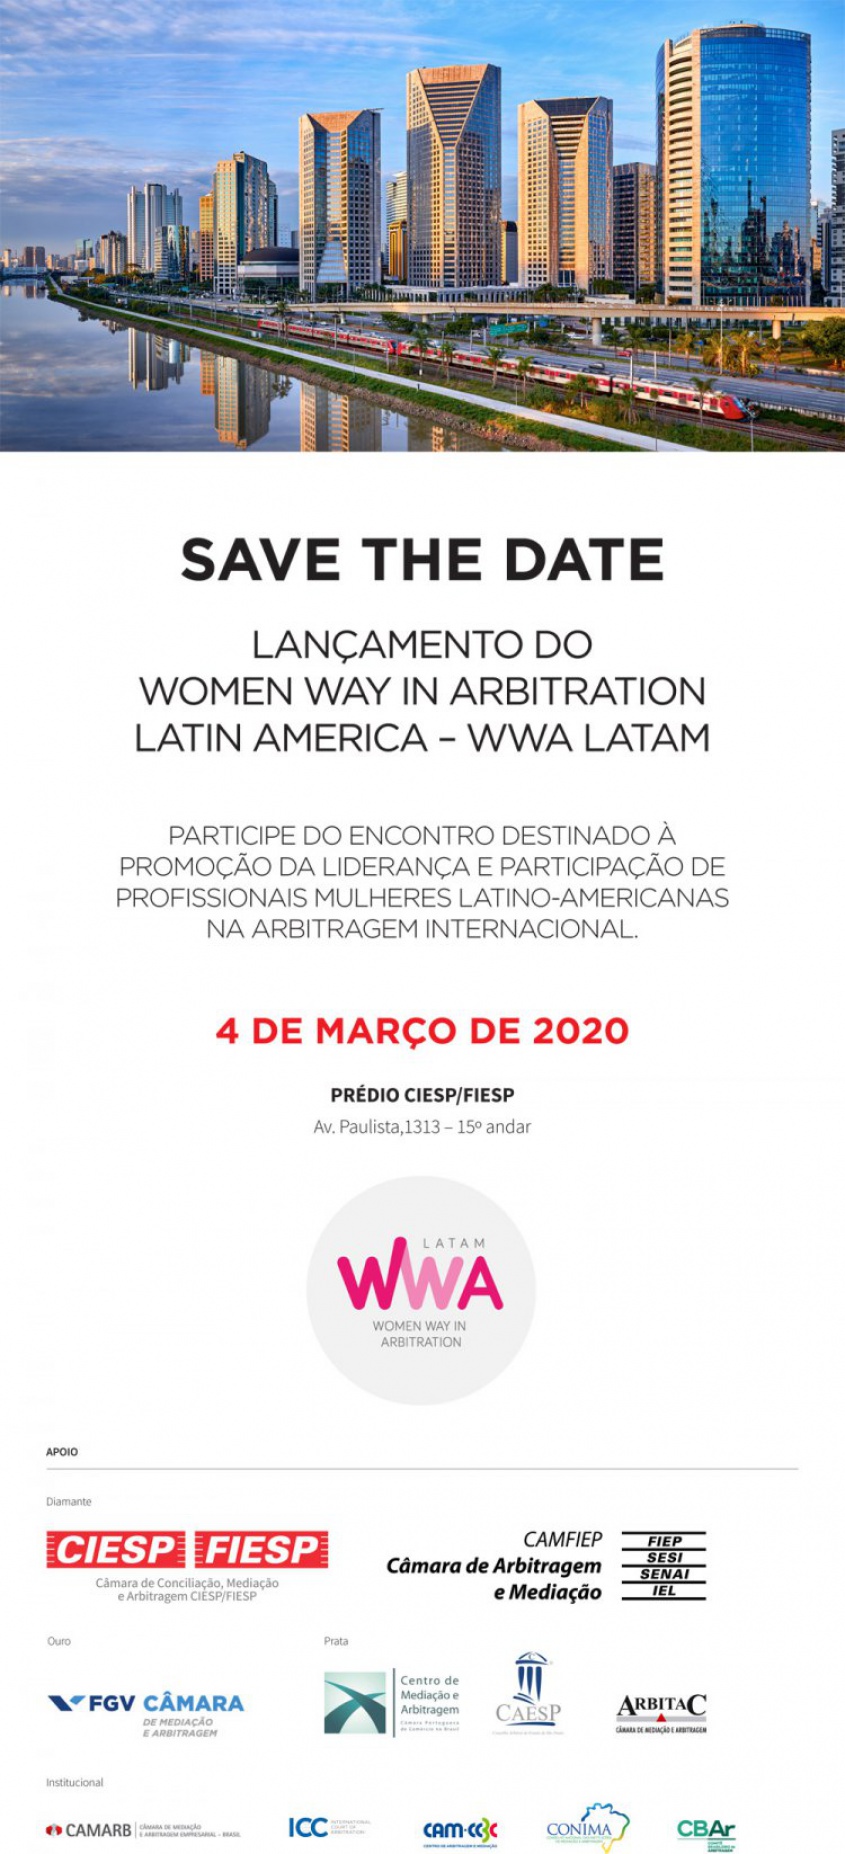 Save the date: Lançamento do Women Way in Arbitration Latin America - WAA LATAM